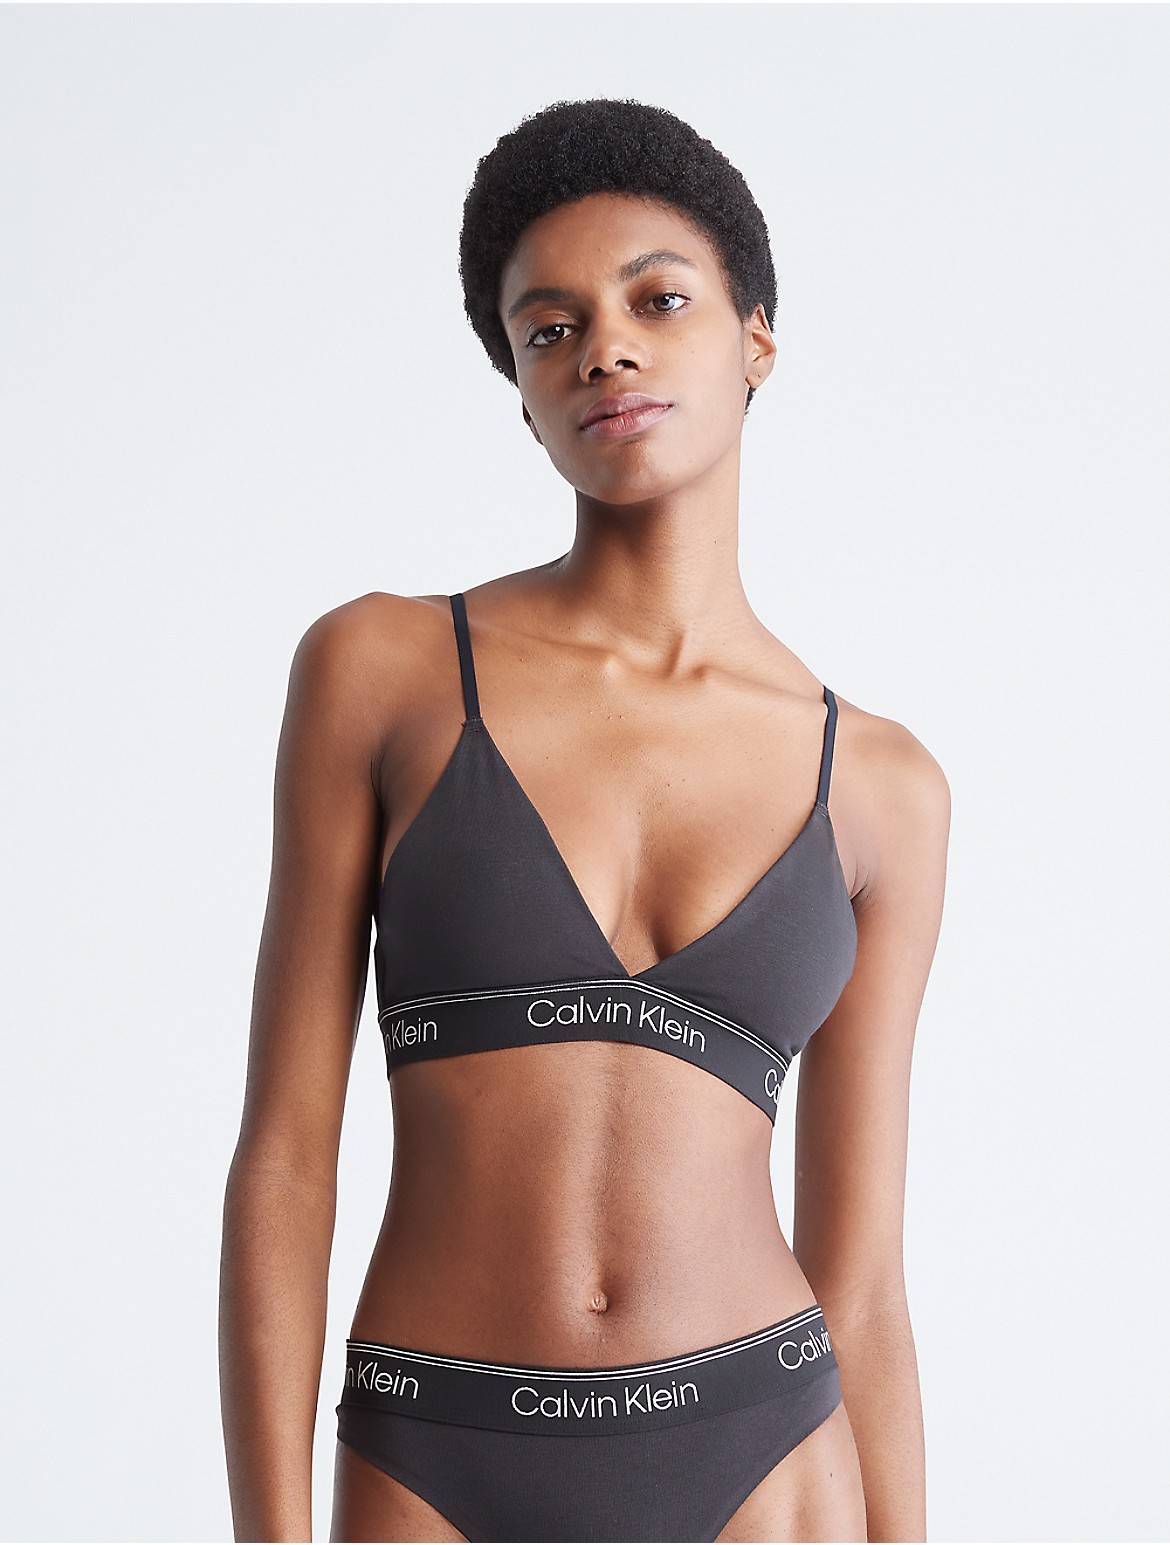 Calvin Klein Women's Calvin Klein Athletic Lightly Lined Triangle Bralette - Black - XS